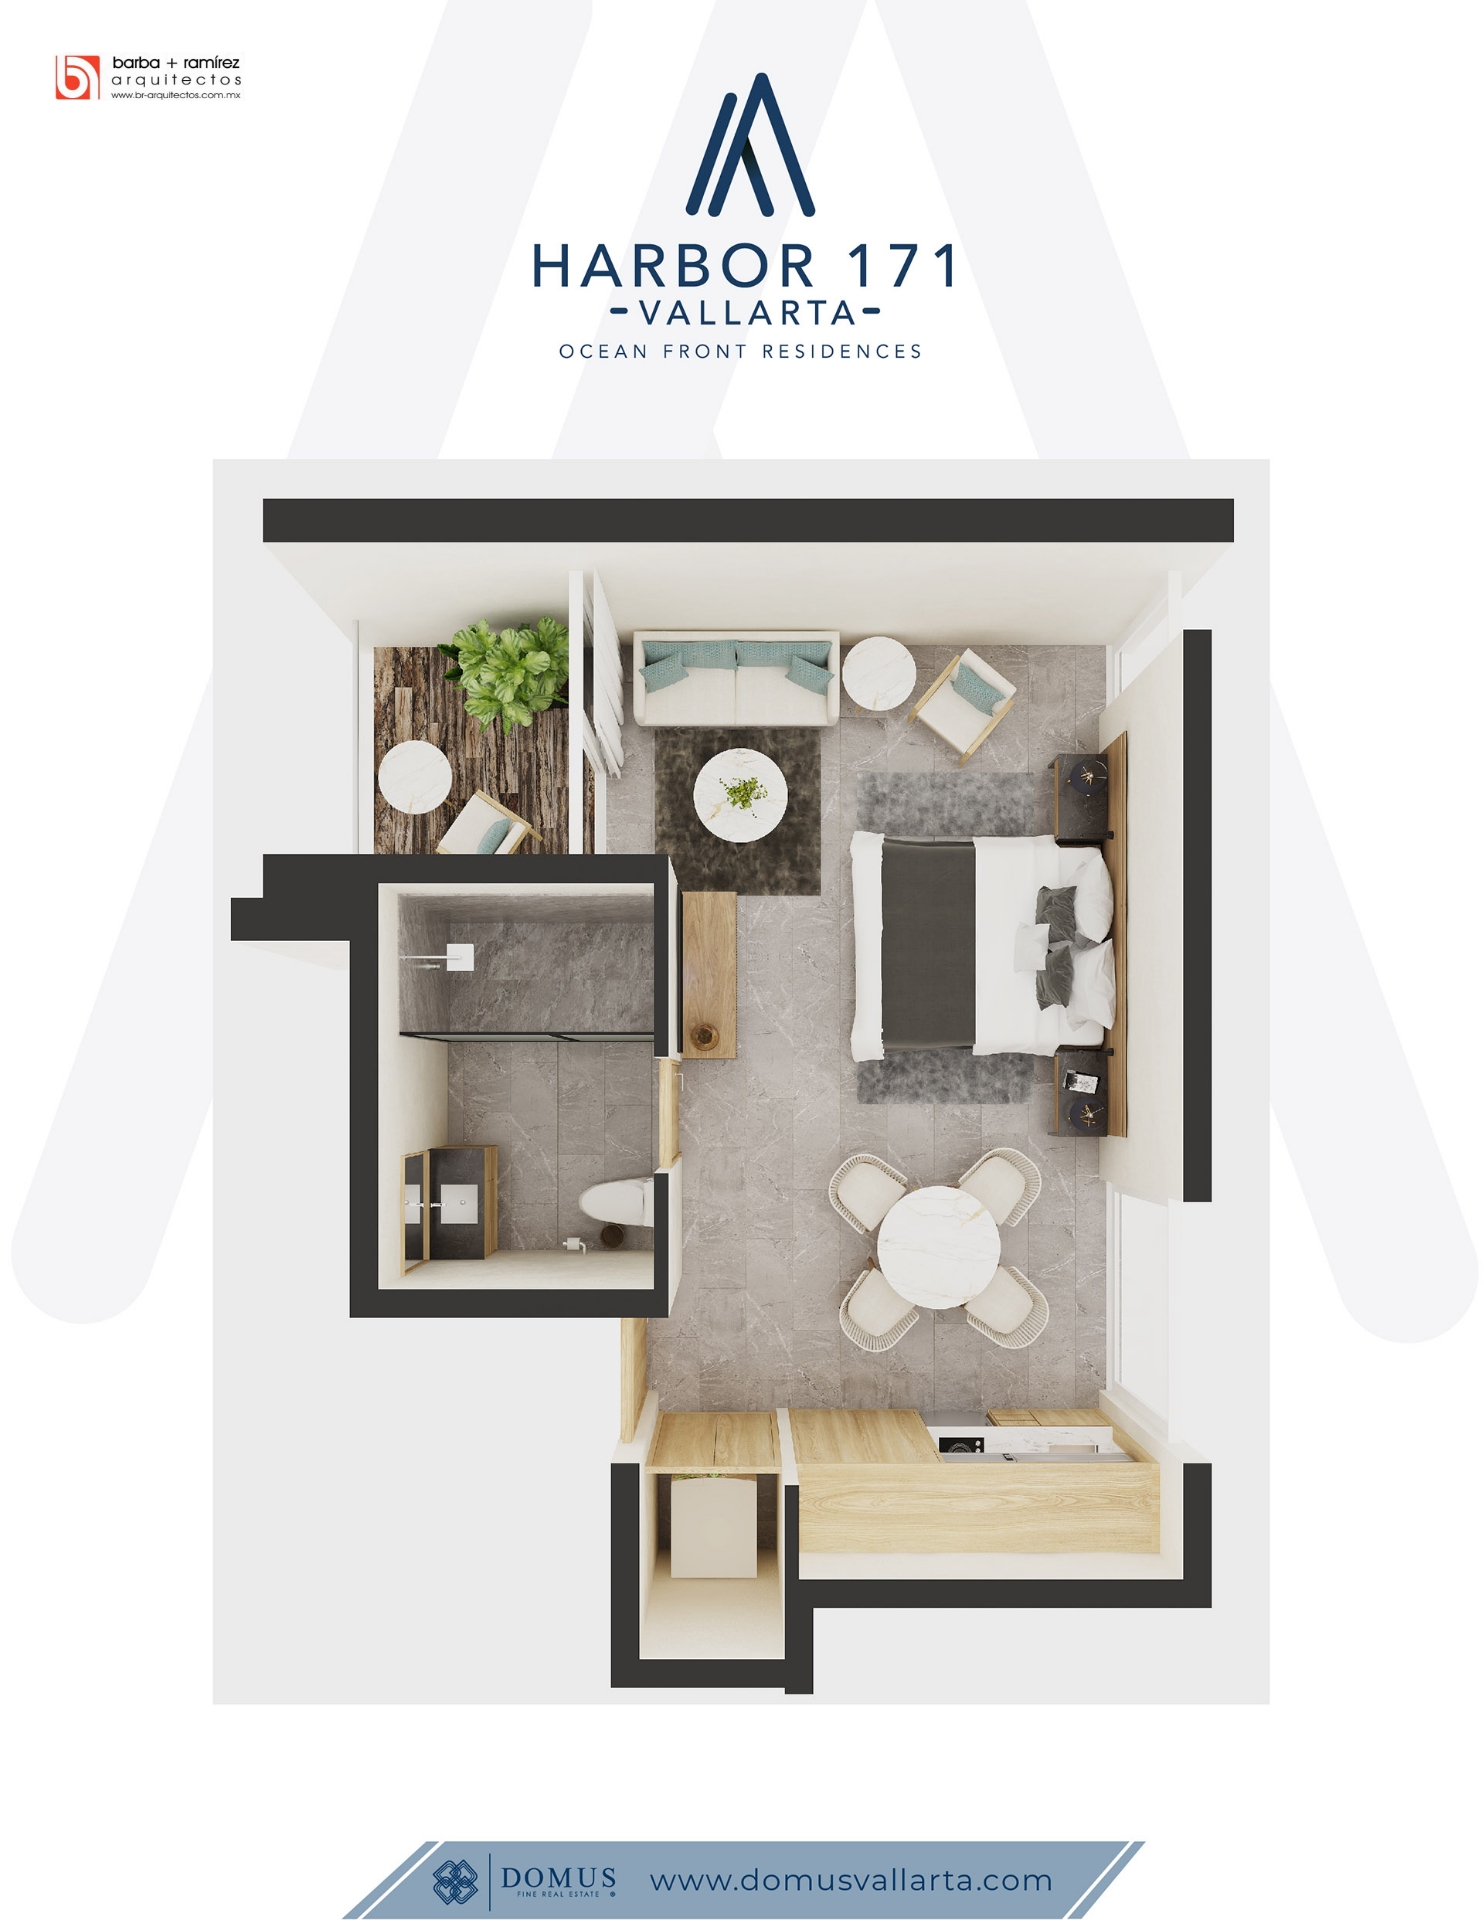 Unit 710 Blueprint - Harbor 171